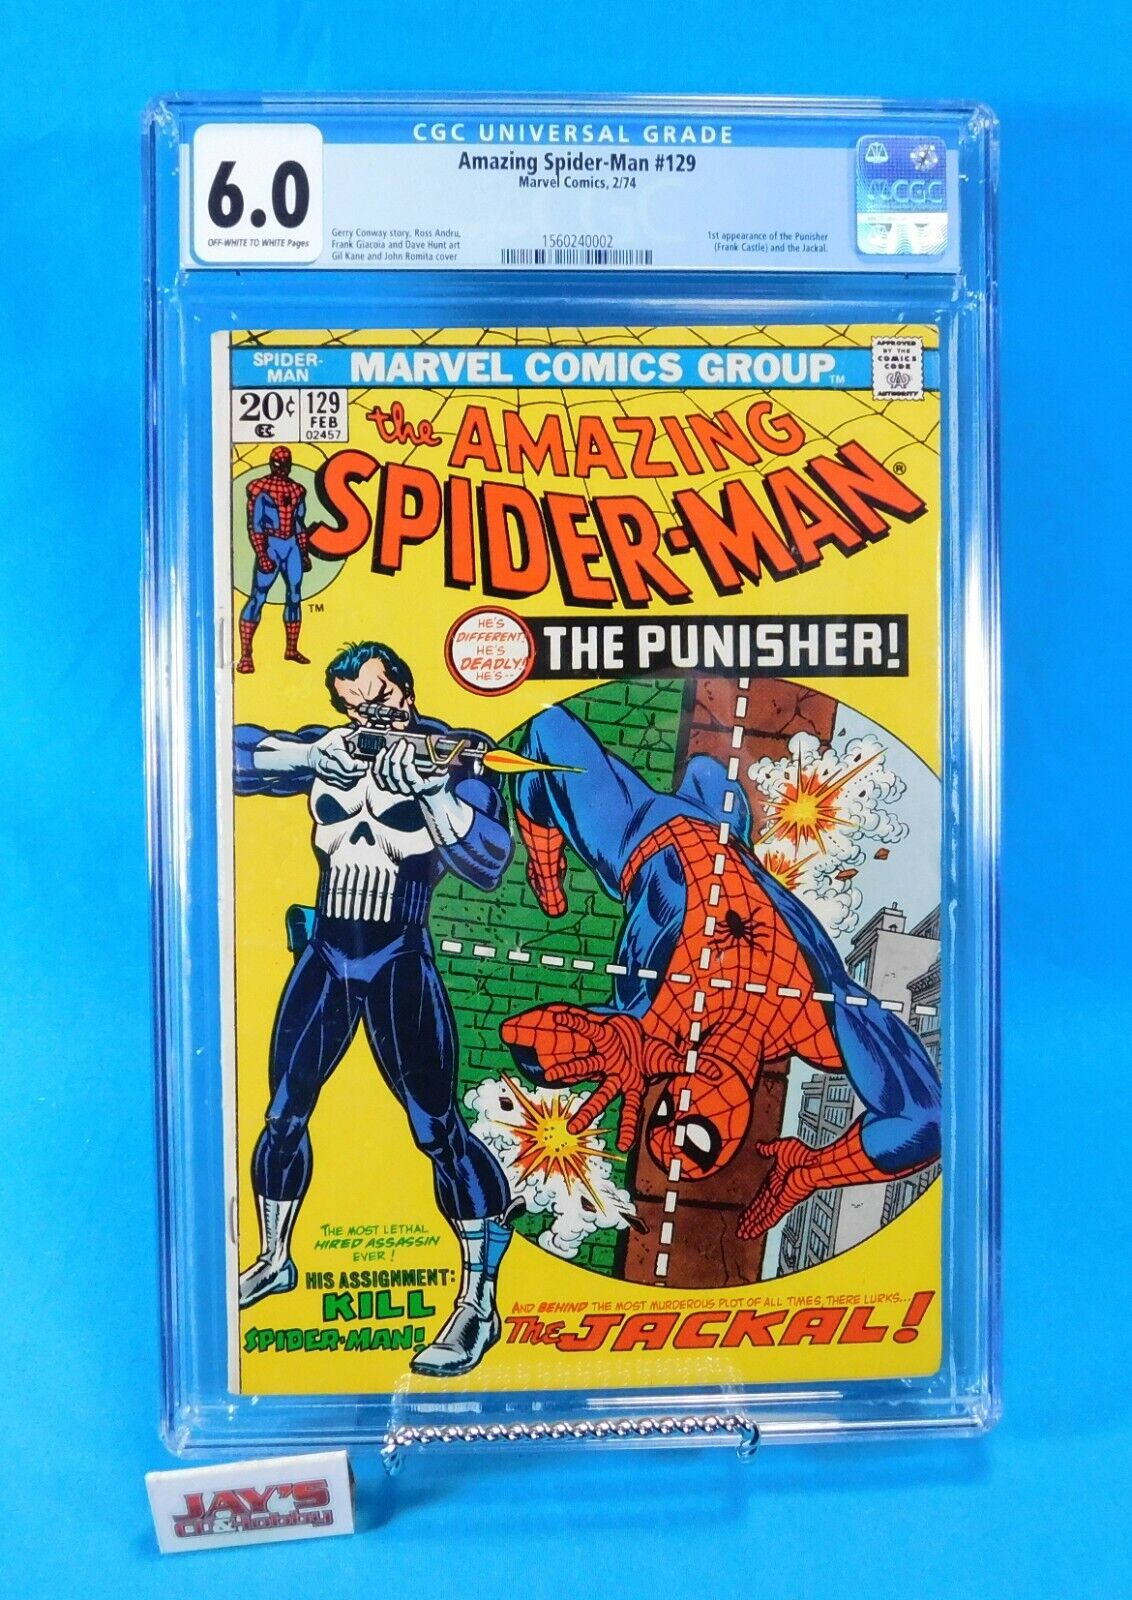 Amazing Spider-Man #129 Marvel Comics 1974 CGC Universal Grade 6.0 PUNISHER